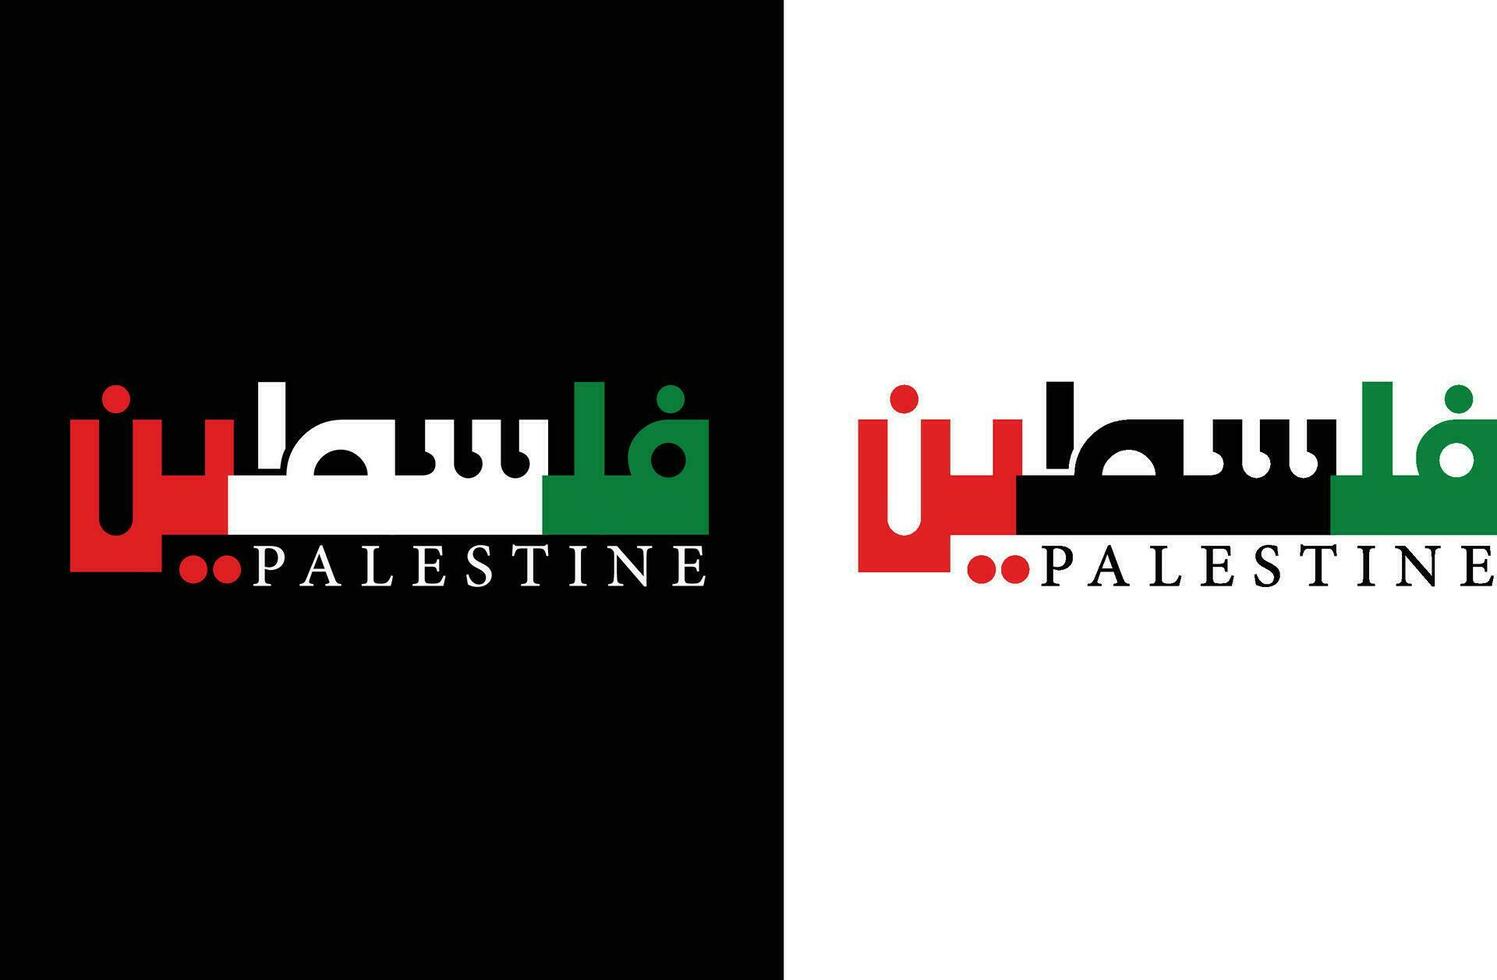 palestina arabicum kalligrafi vektor design - palestina text logotyp